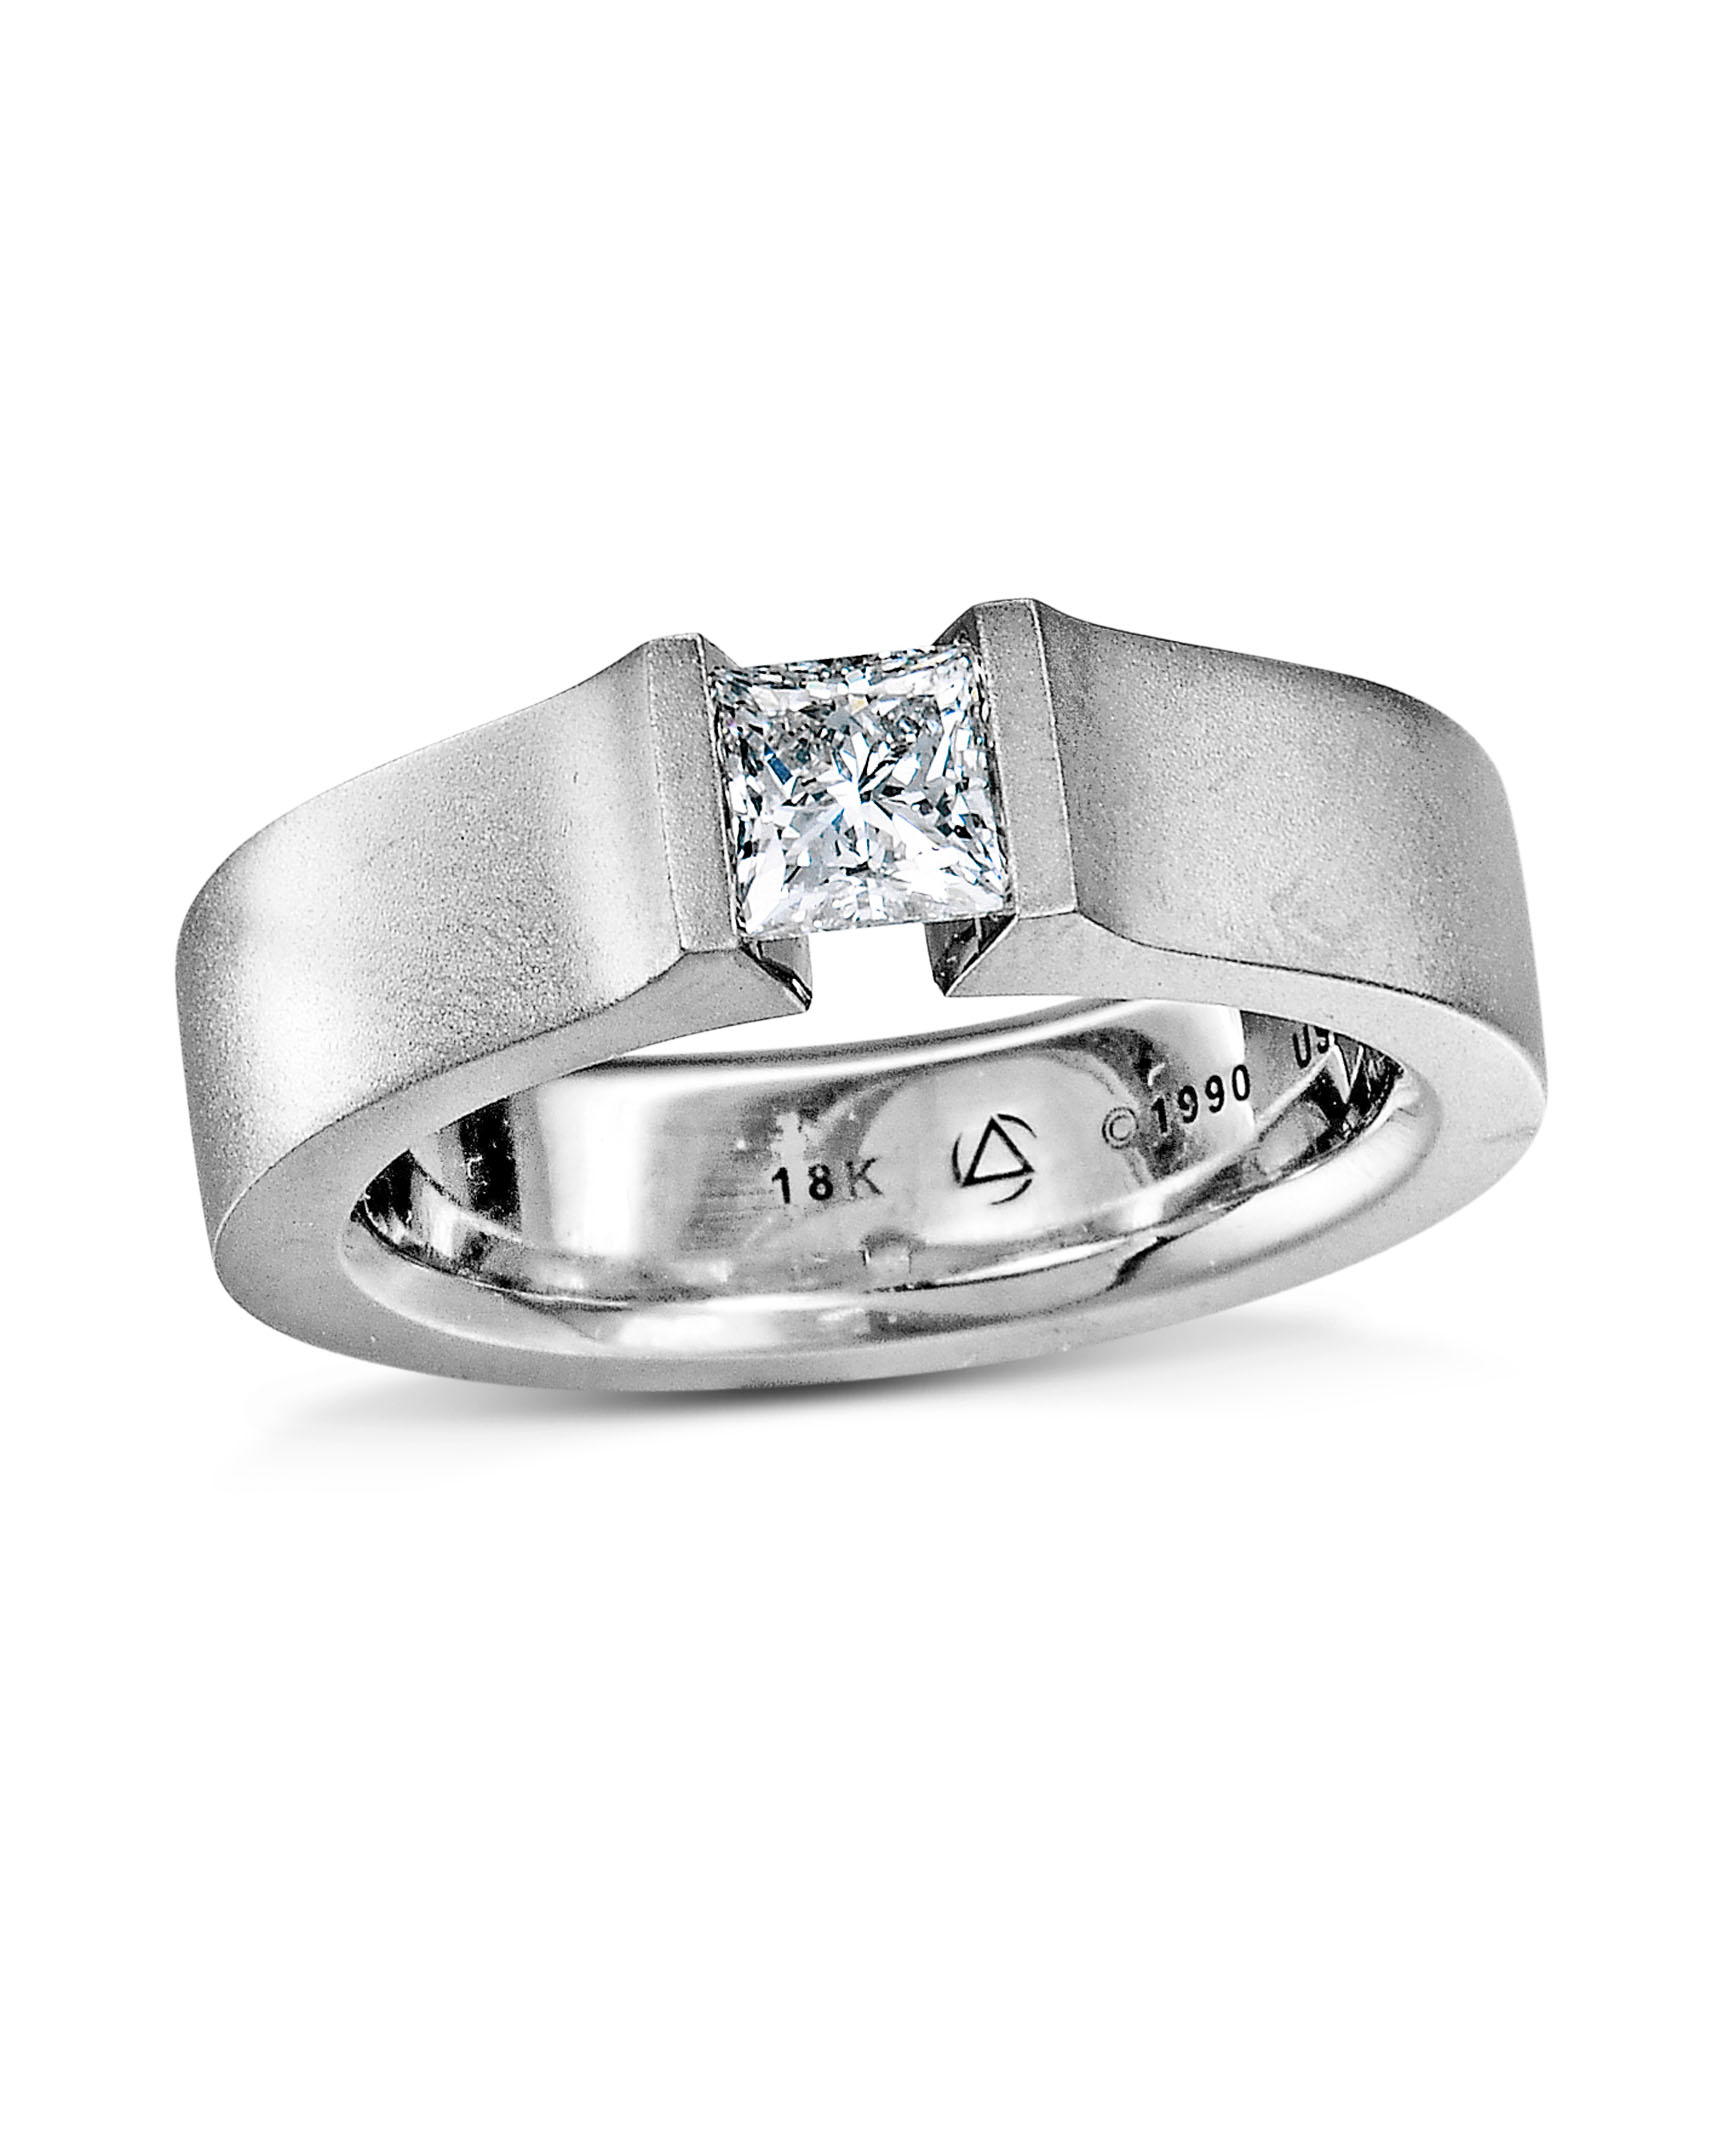 Bijoux Tension Set Engagement Ring in 14K, 18K or Platinum | Luxe Wholesale  Diamonds